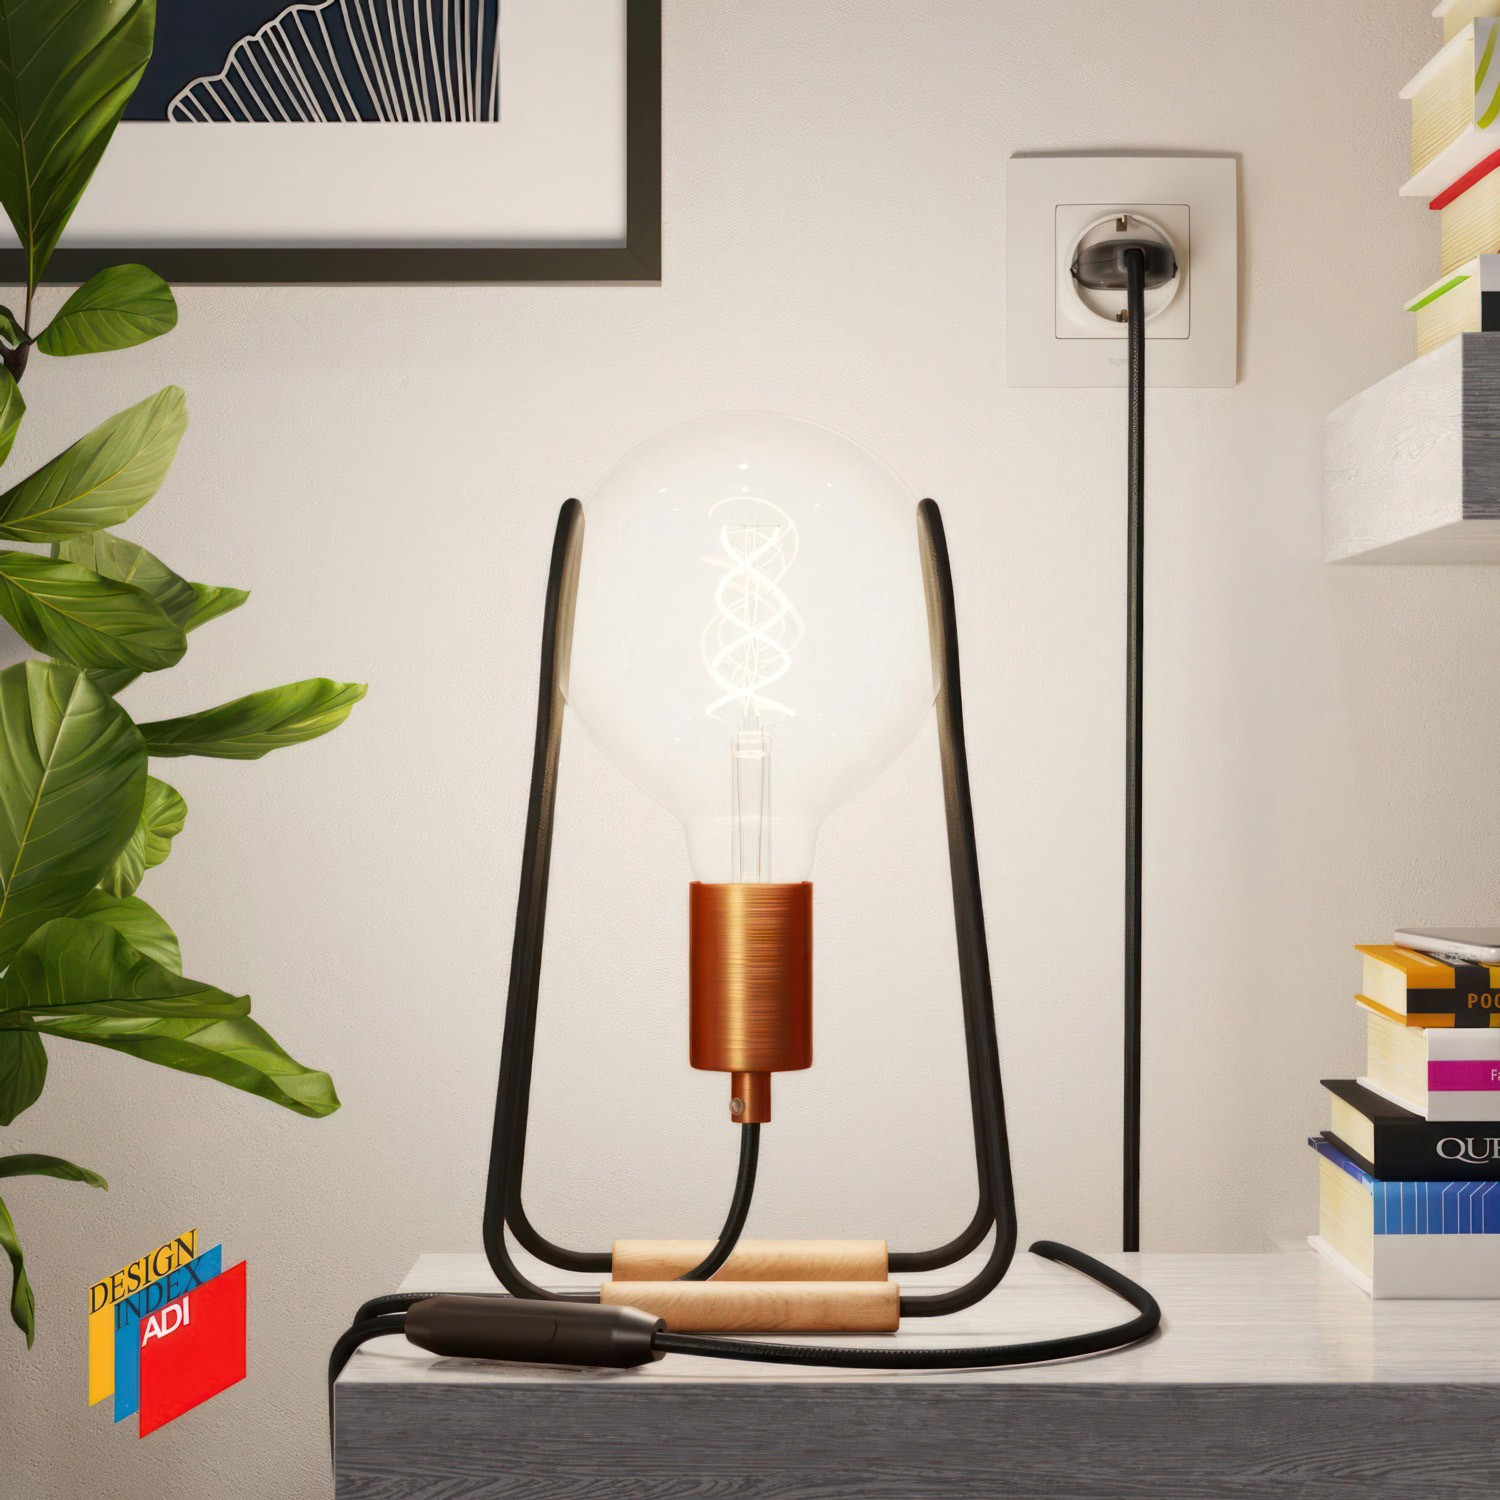 Taché Metal, bordslampa komplett med textilkabel, strömbrytare samt 2 polig stickpropp